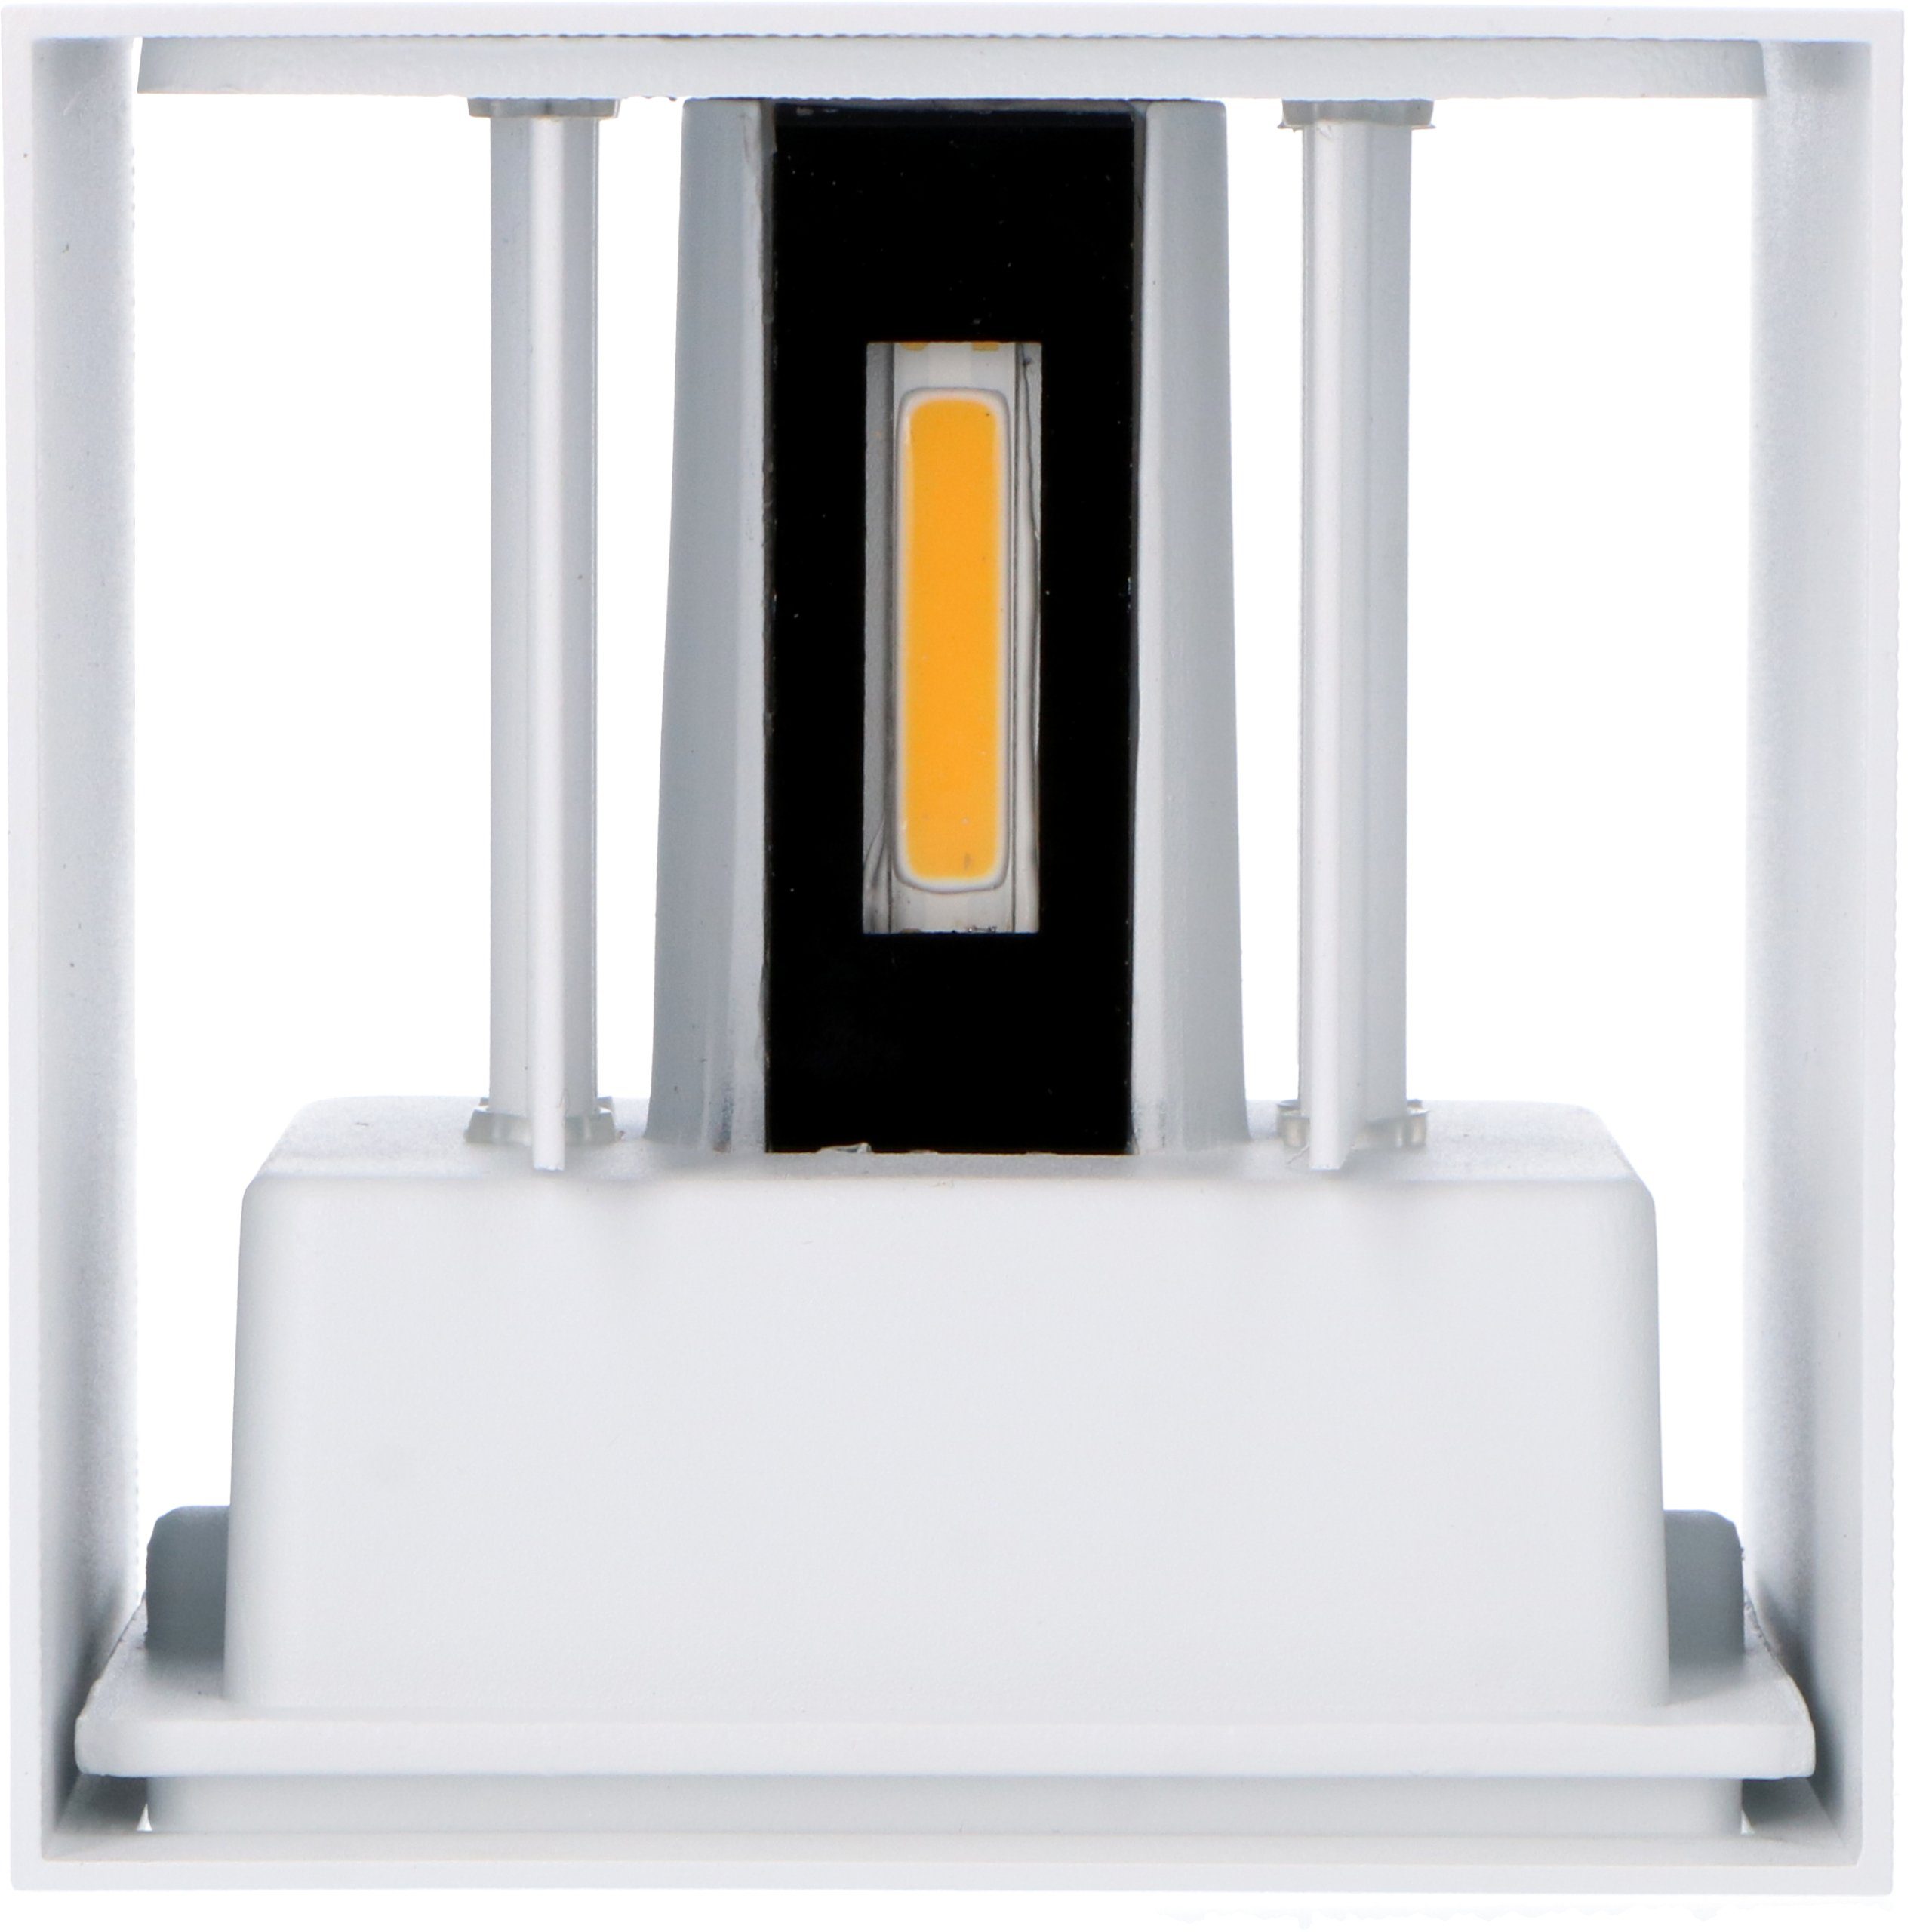 LED LED, 1000556 warmweiß Watt weiß Up-Down LED Außen-Wandleuchte, LED's light IP65 6 Außen-Wandleuchte